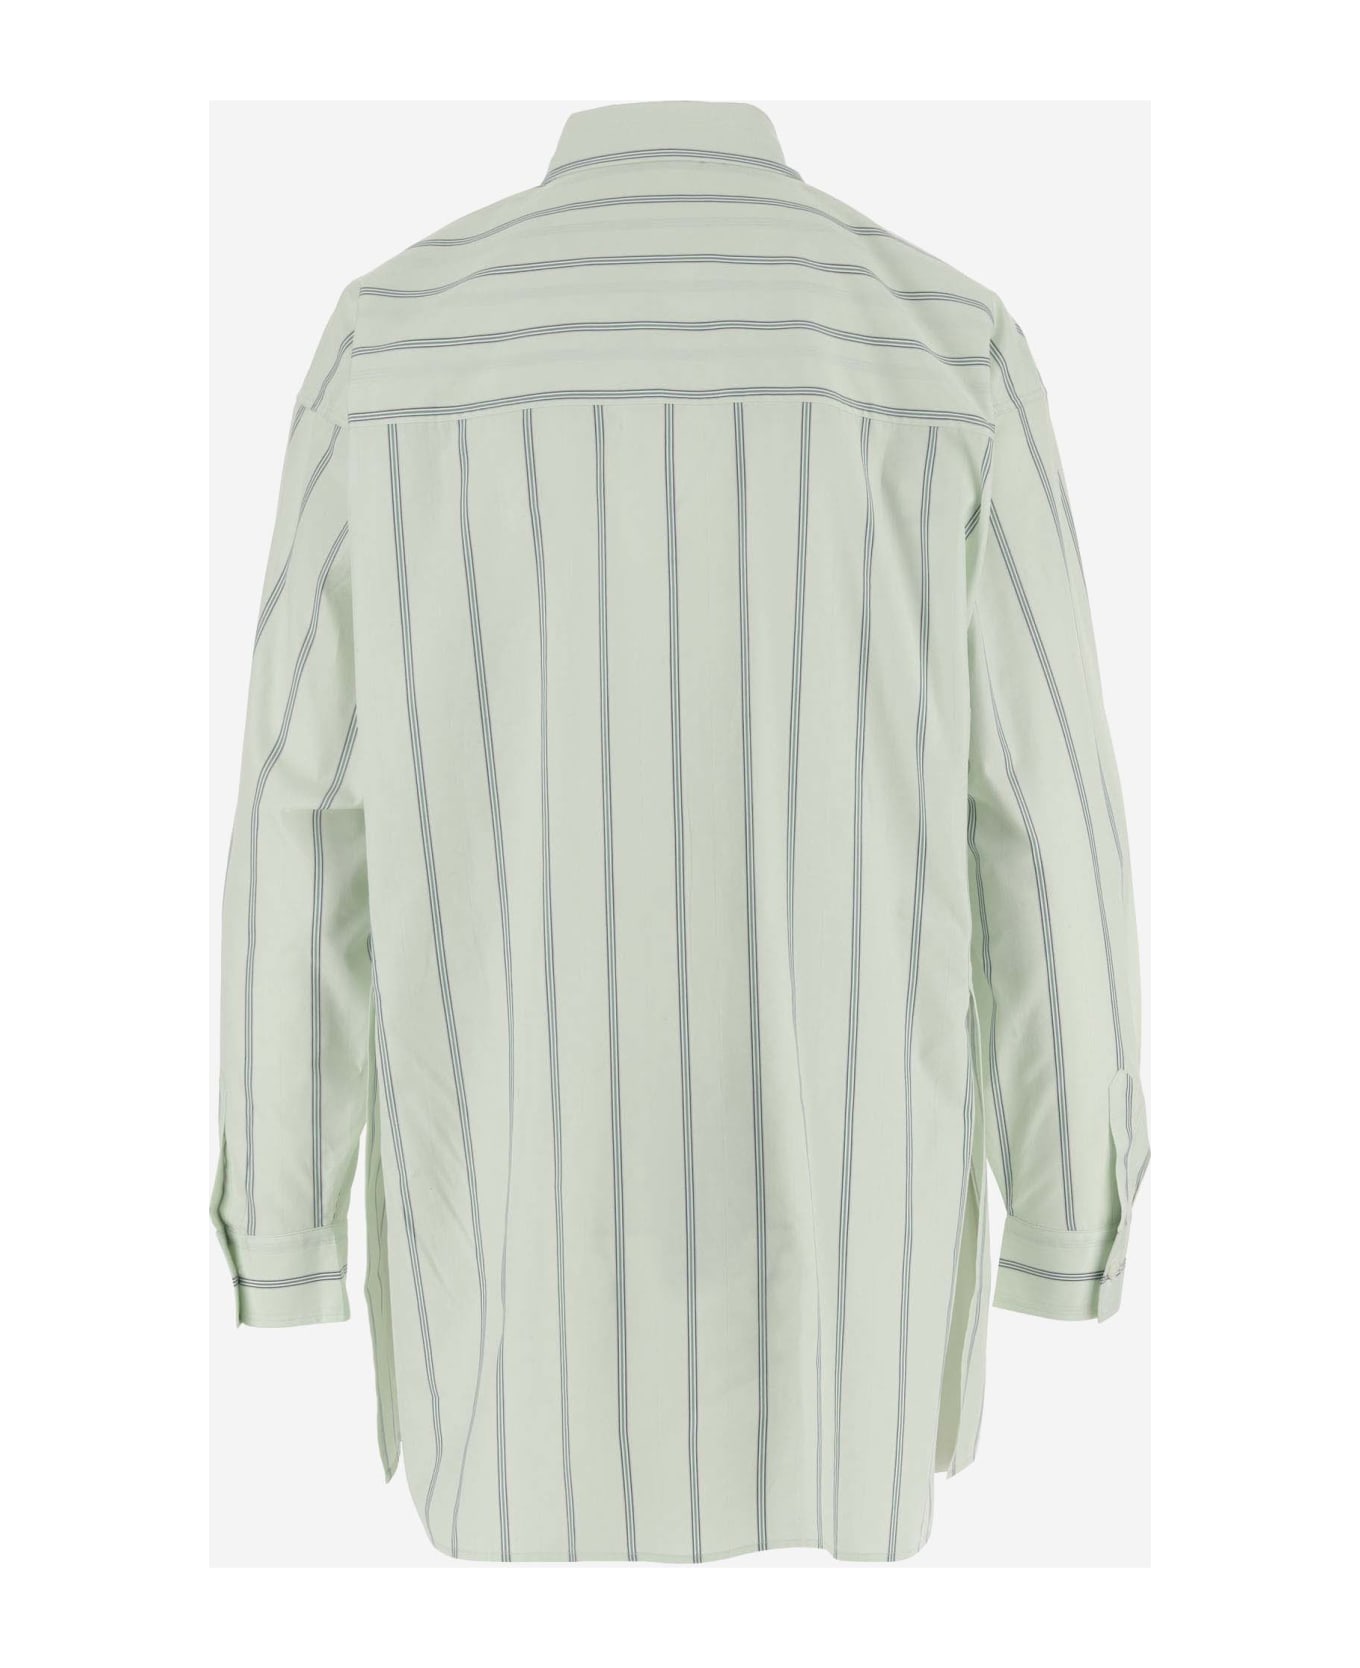 Aspesi Cotton Shirt With Striped Pattern - Green シャツ